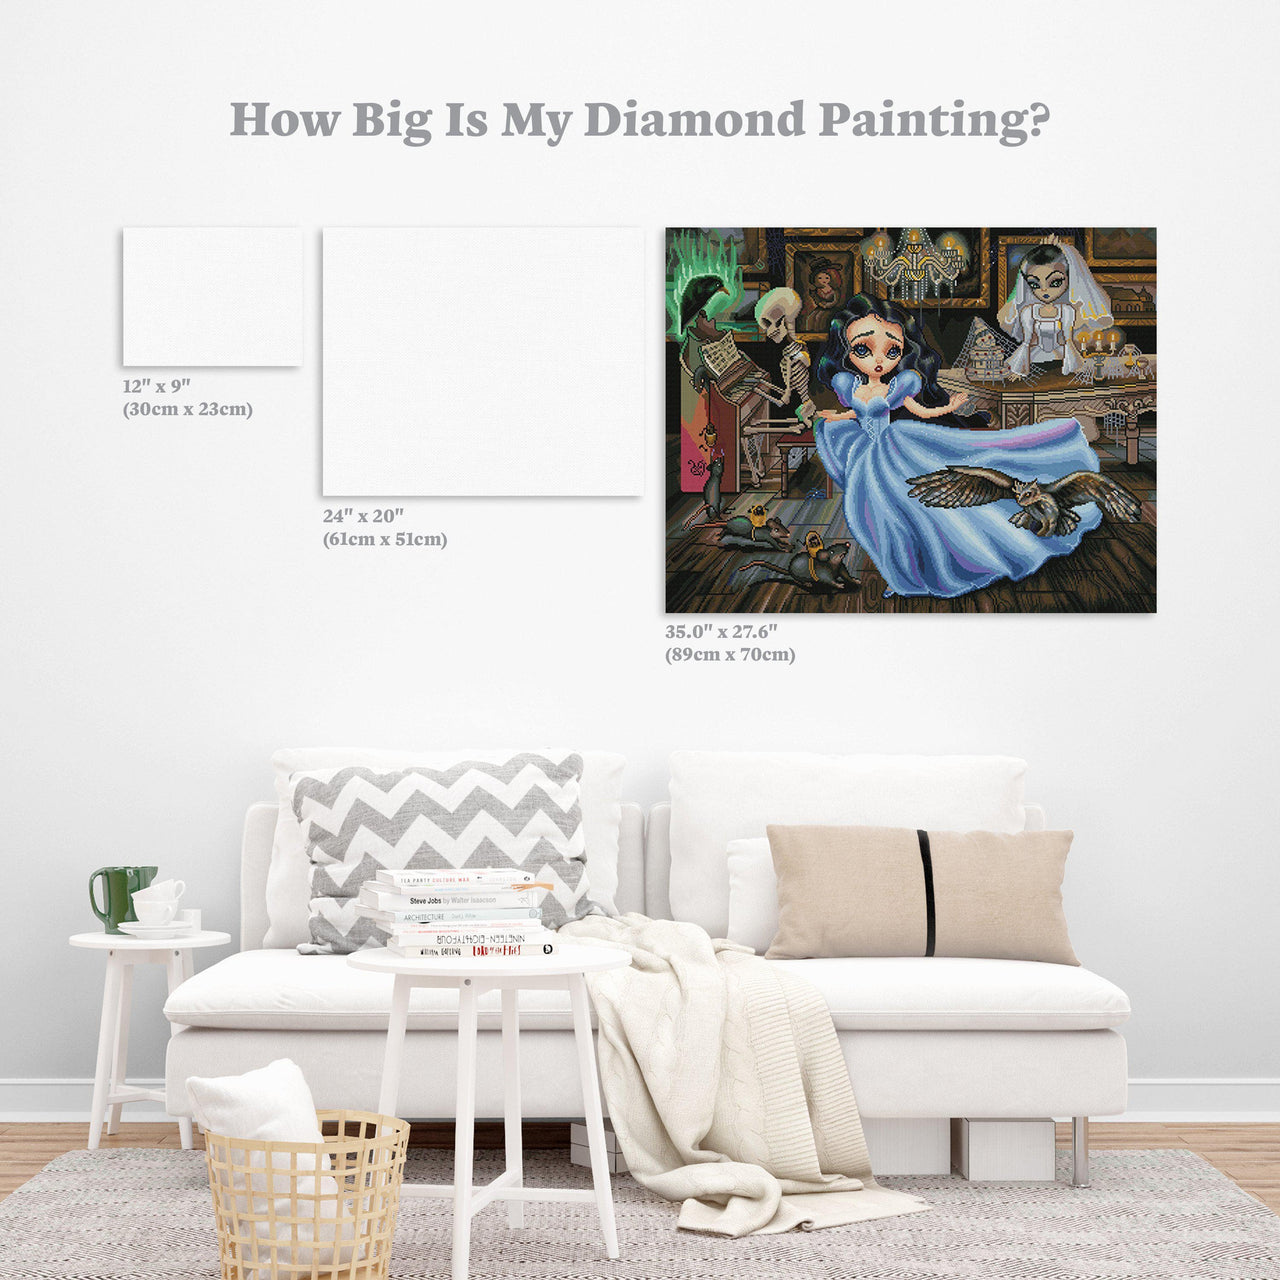 Diamond Painting Miss Havisham 35.0" x 27.6″ (89cm x 70cm) / Square with 58 Colors including 1 AB